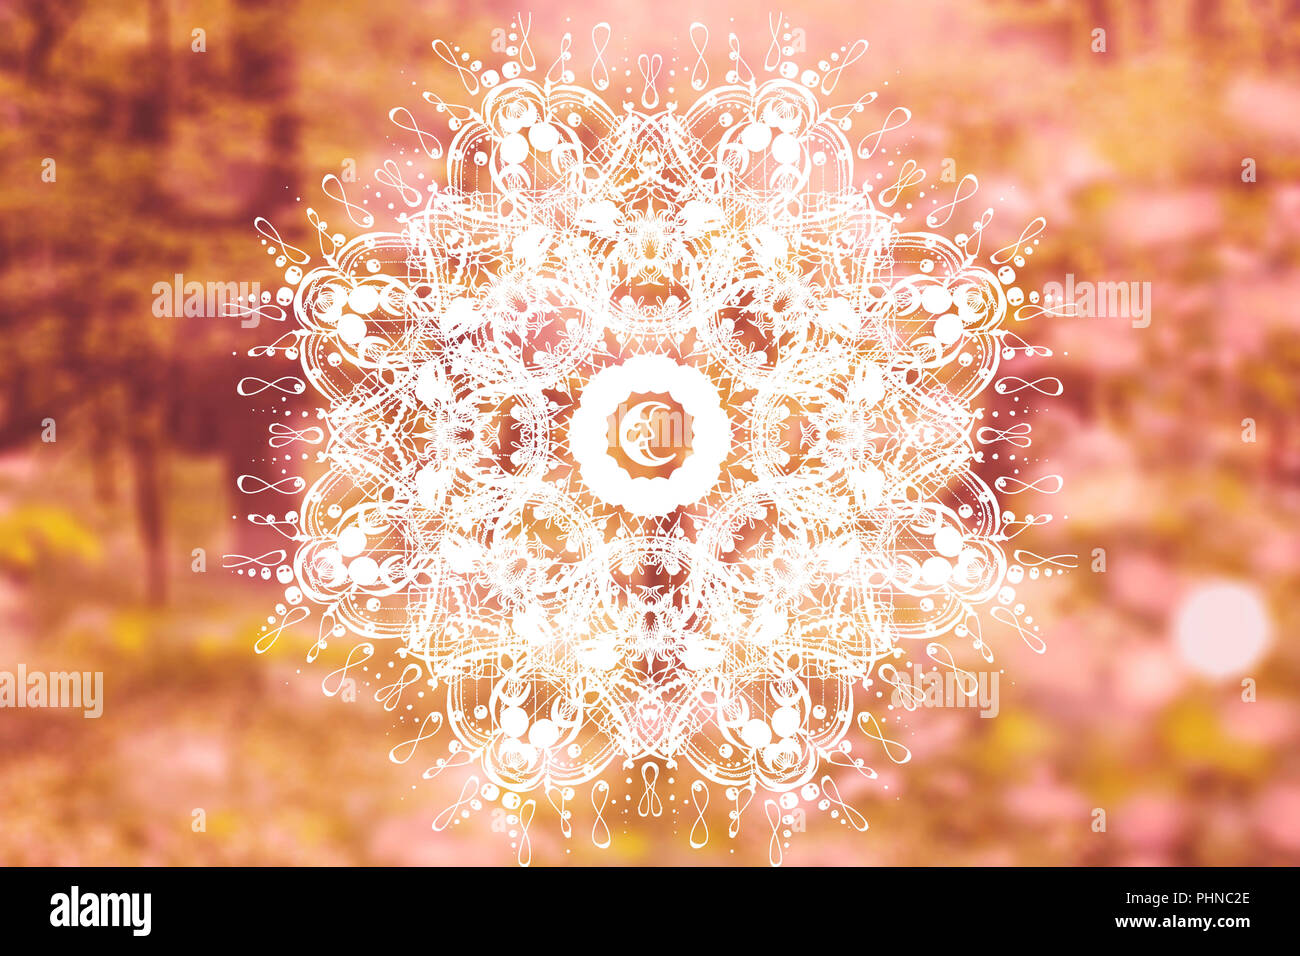 Abstract mandala with sacred geometry and spiritual symbols Stock Photo